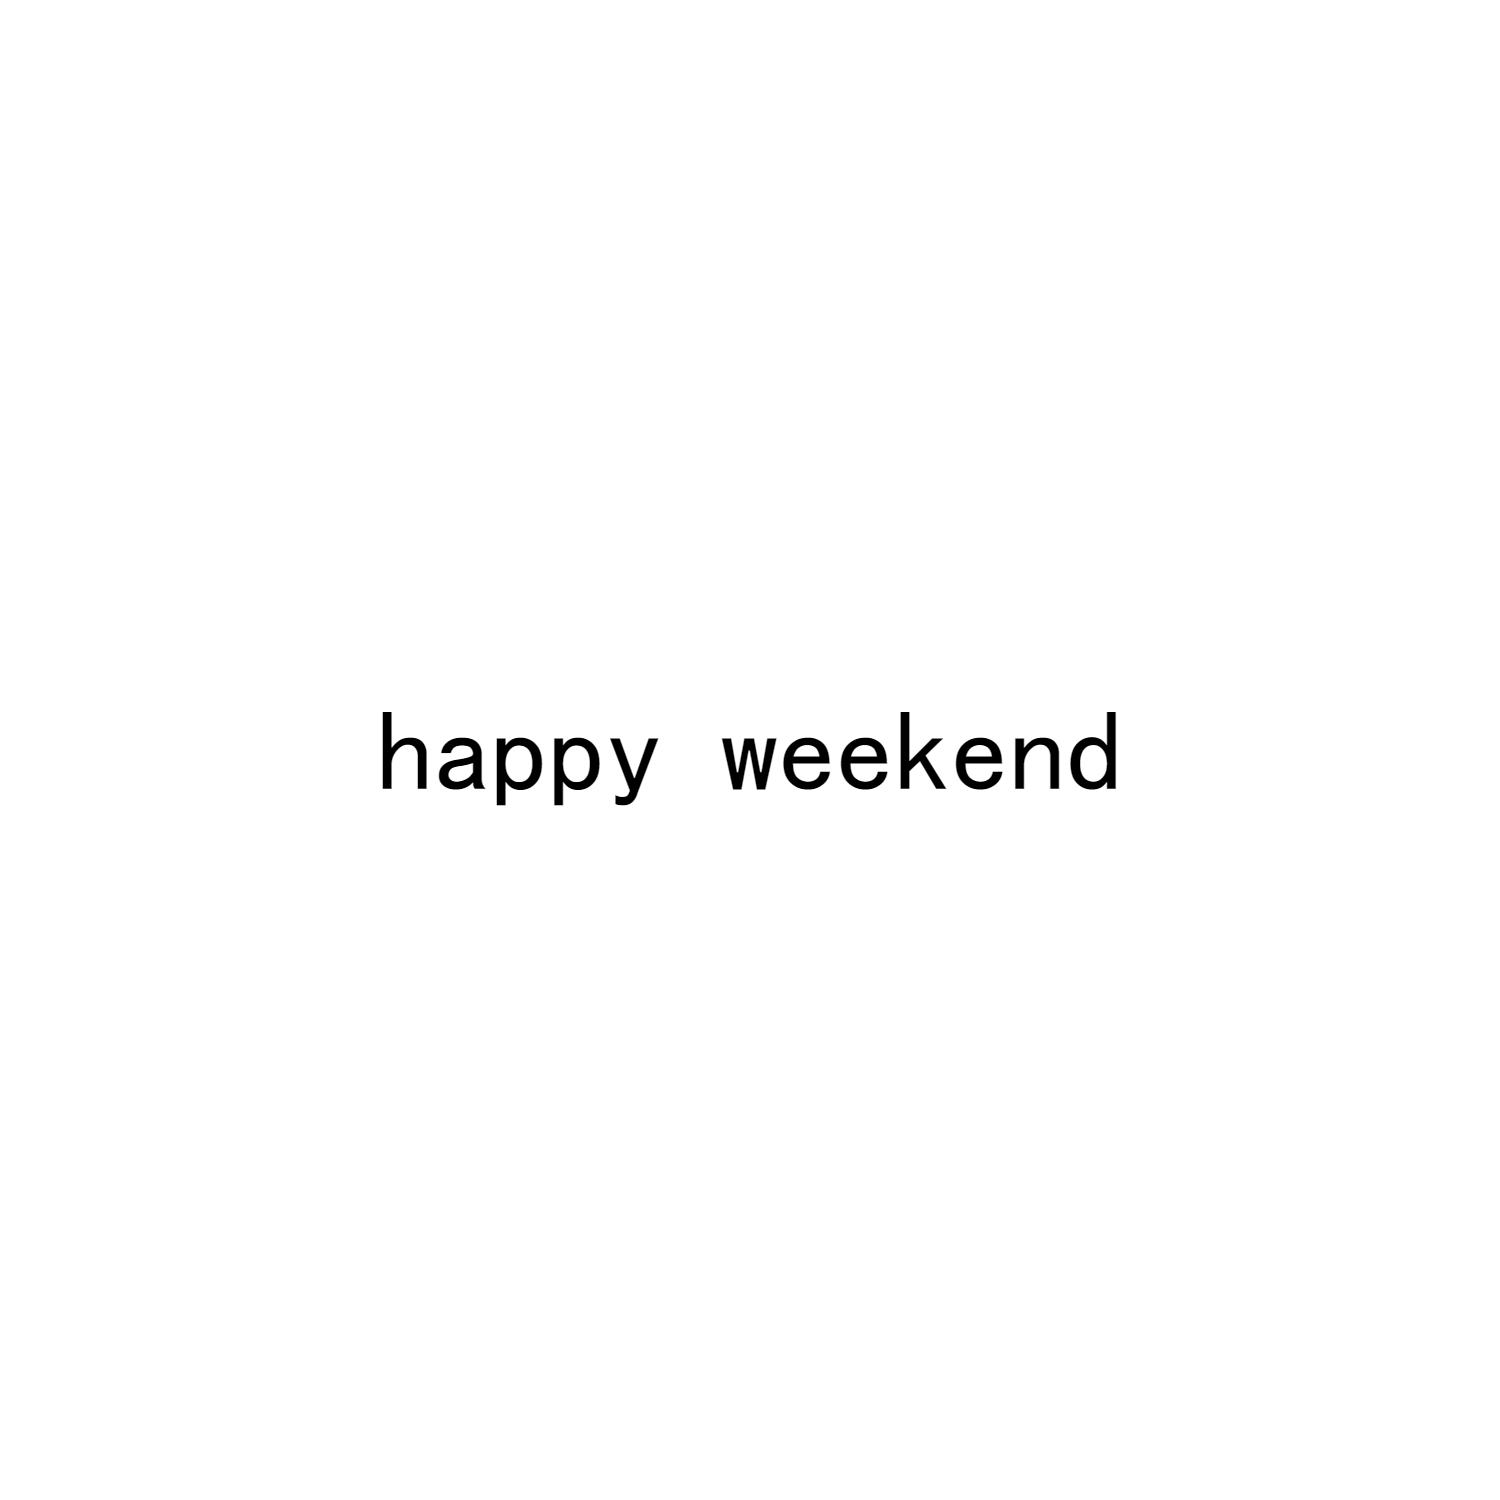 happy weekend